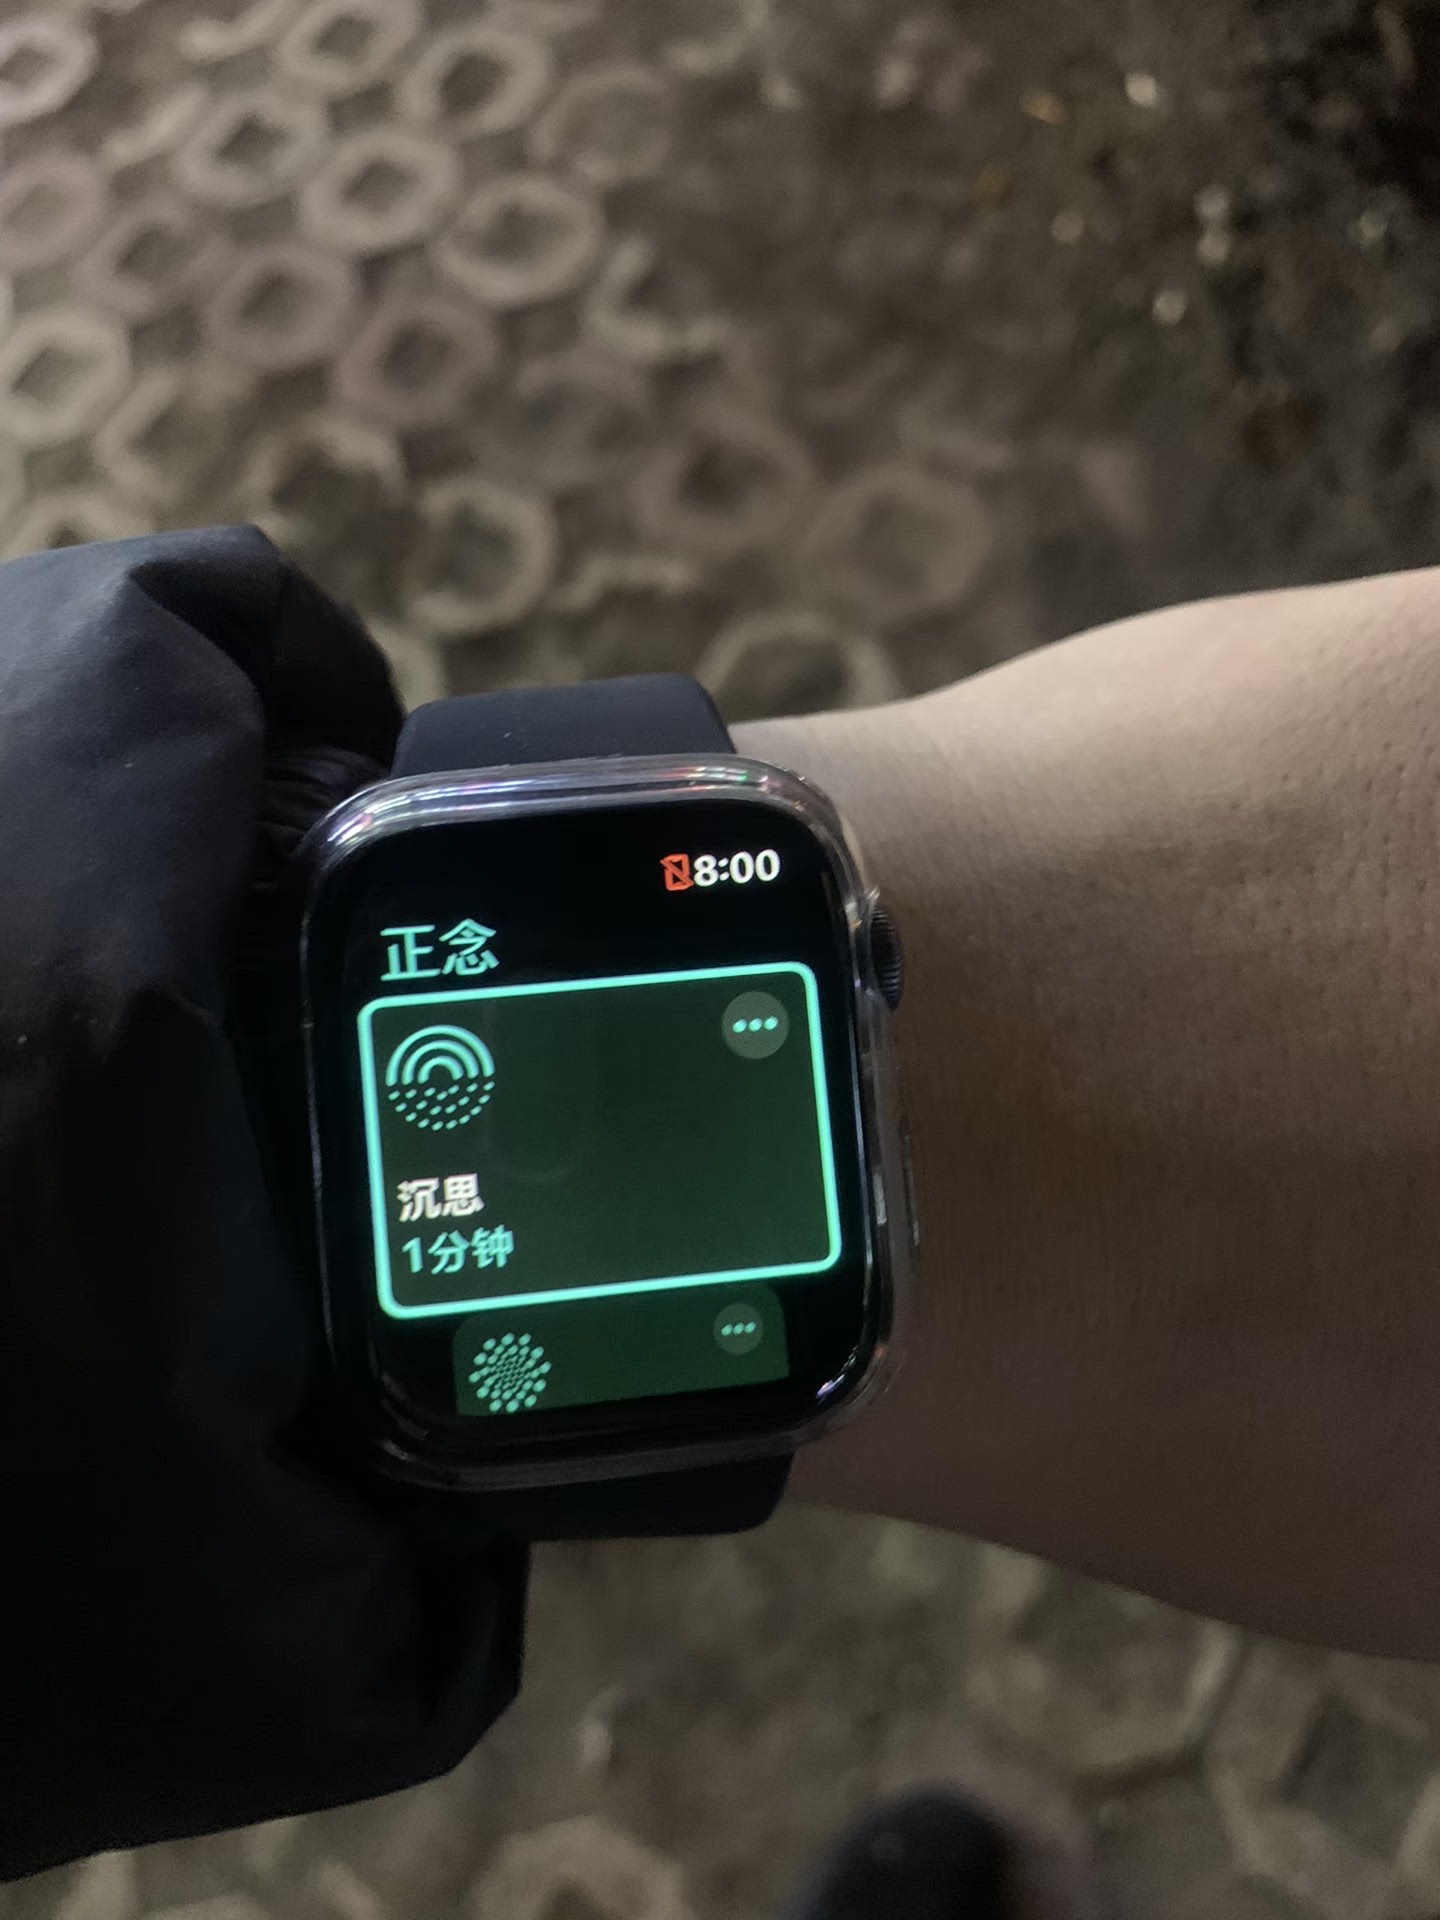 2、Apple Watch GPS版本可以接电话吗？